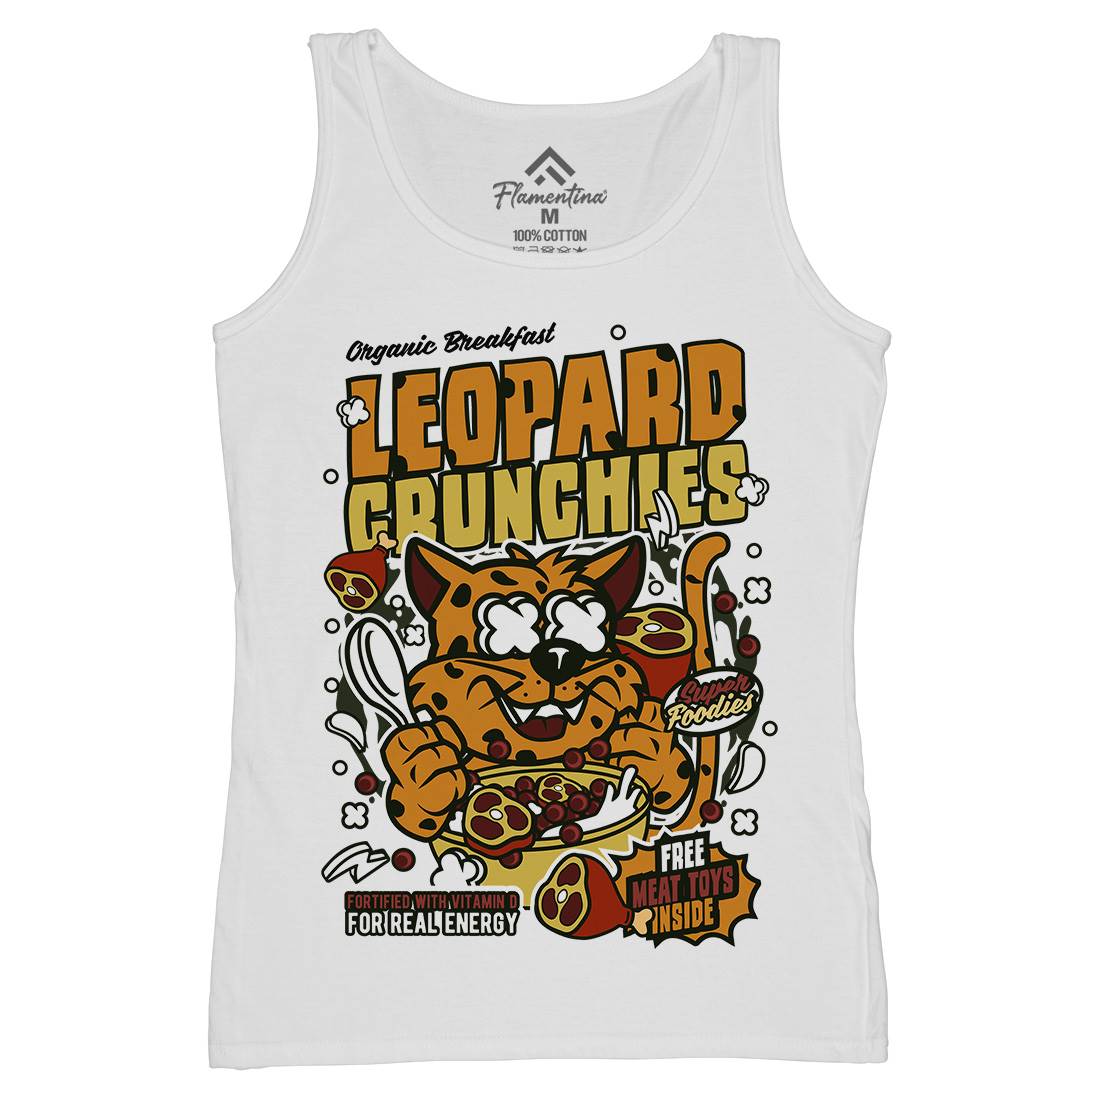 Leopard Crunchies Womens Organic Tank Top Vest Food C579